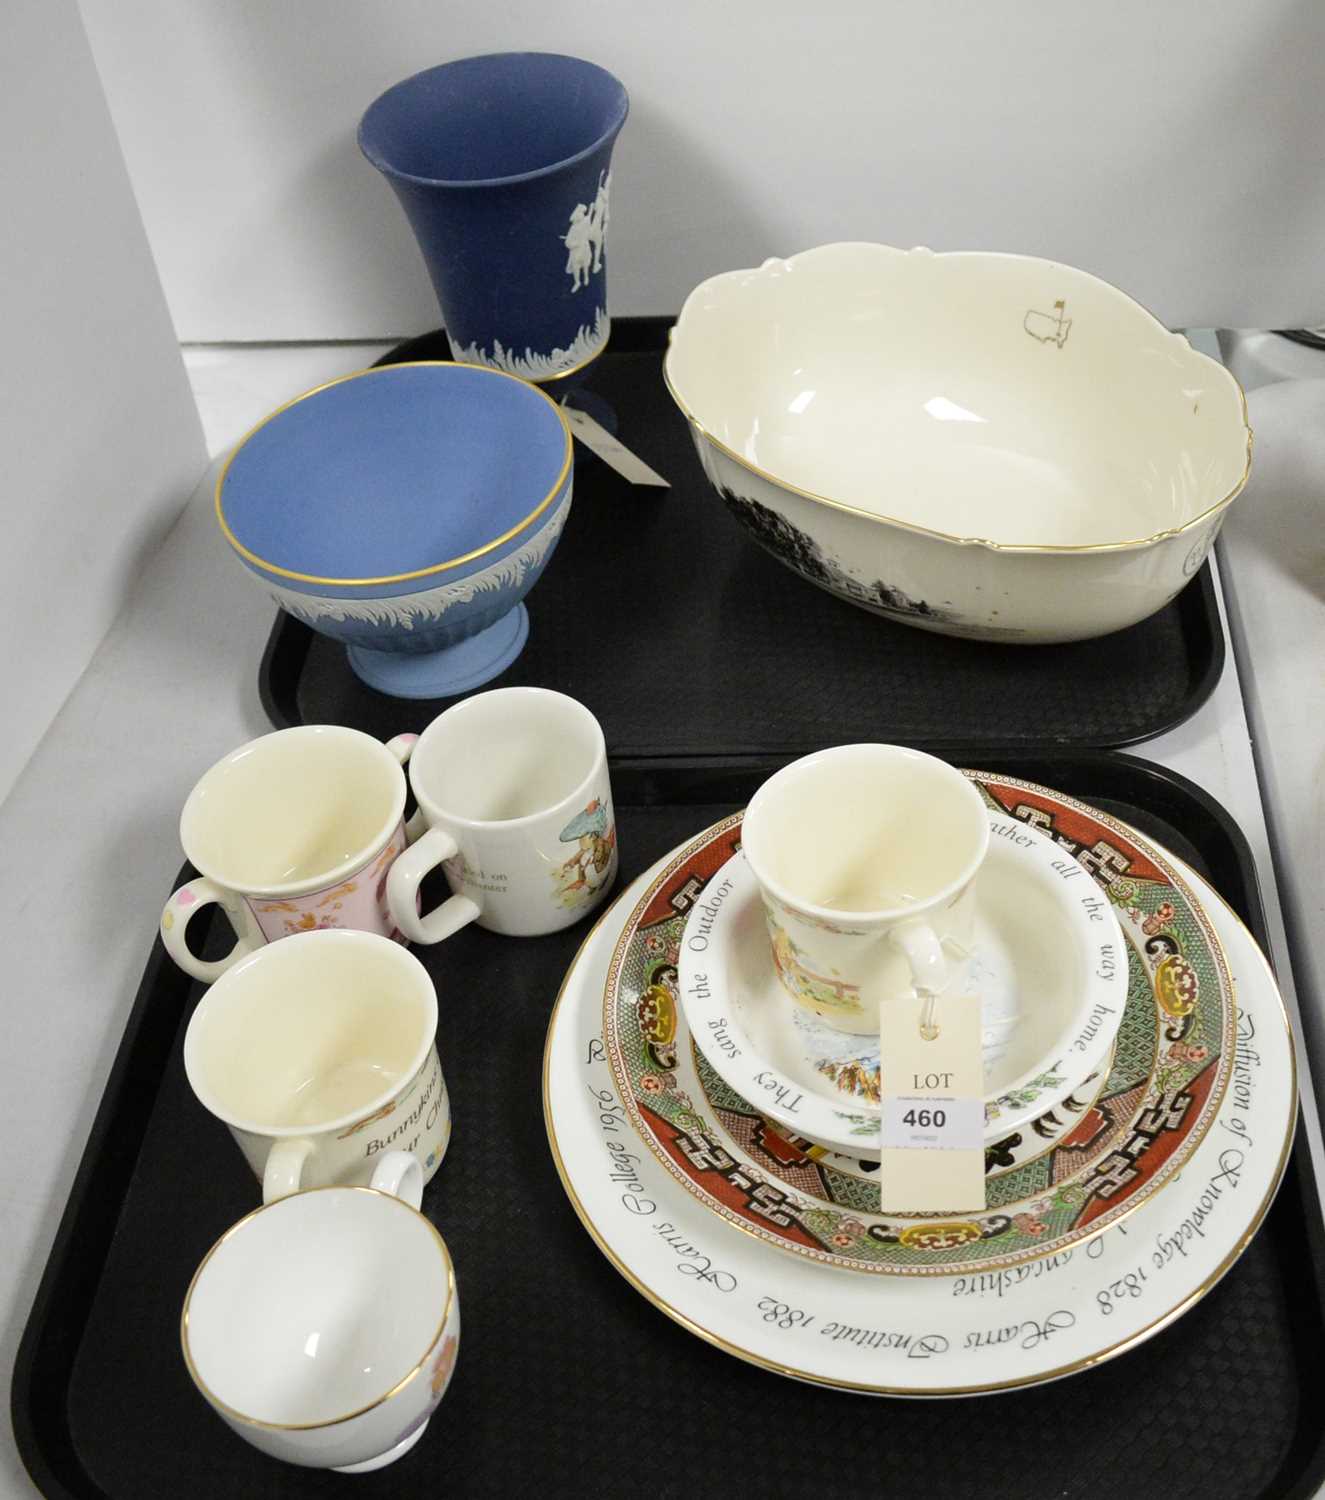 Lot 460 - A selection of decorative ceramics